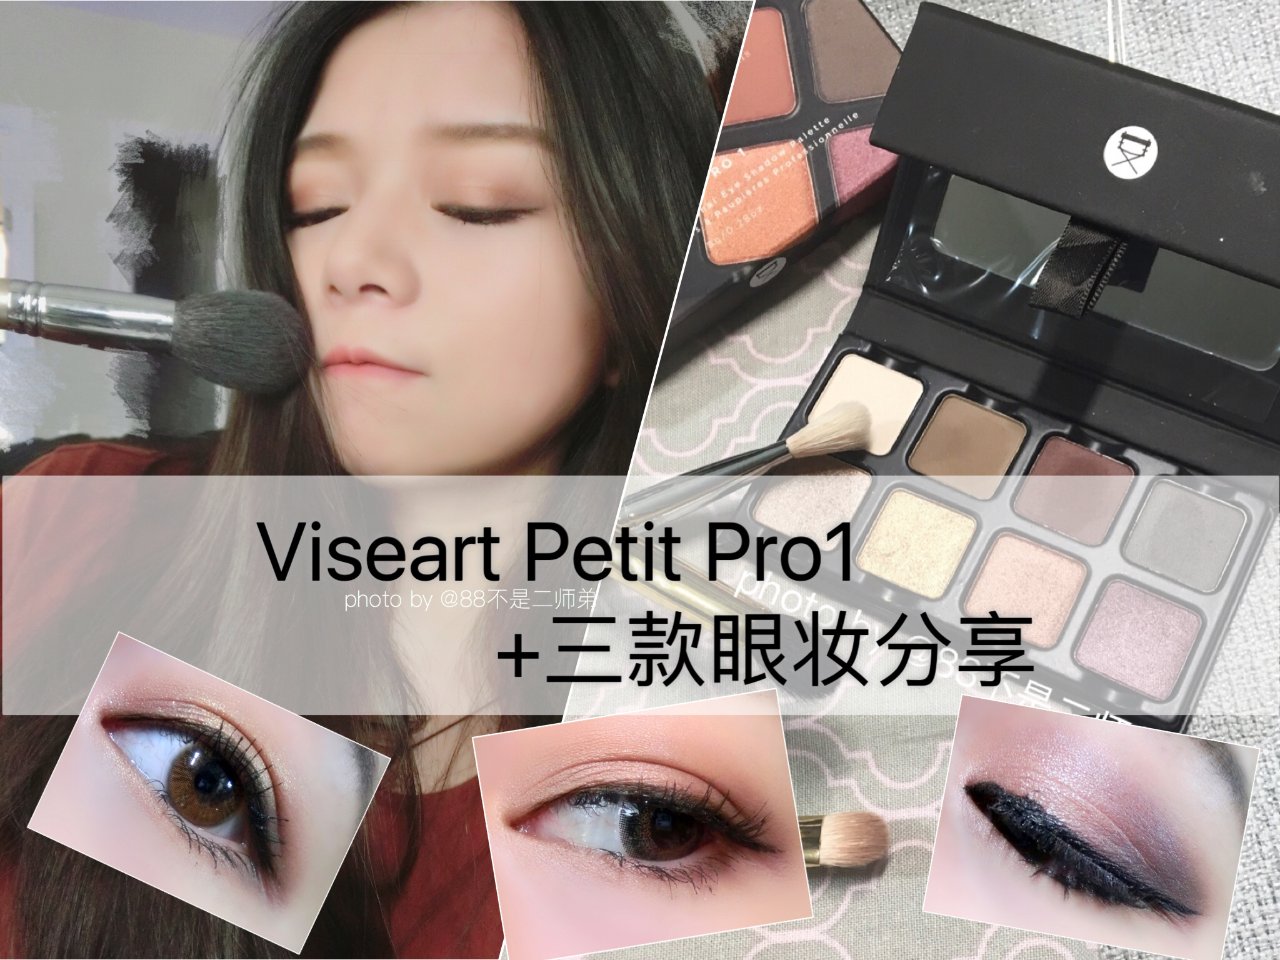 Viseart Petit Pro1三款眼妆及心得分享